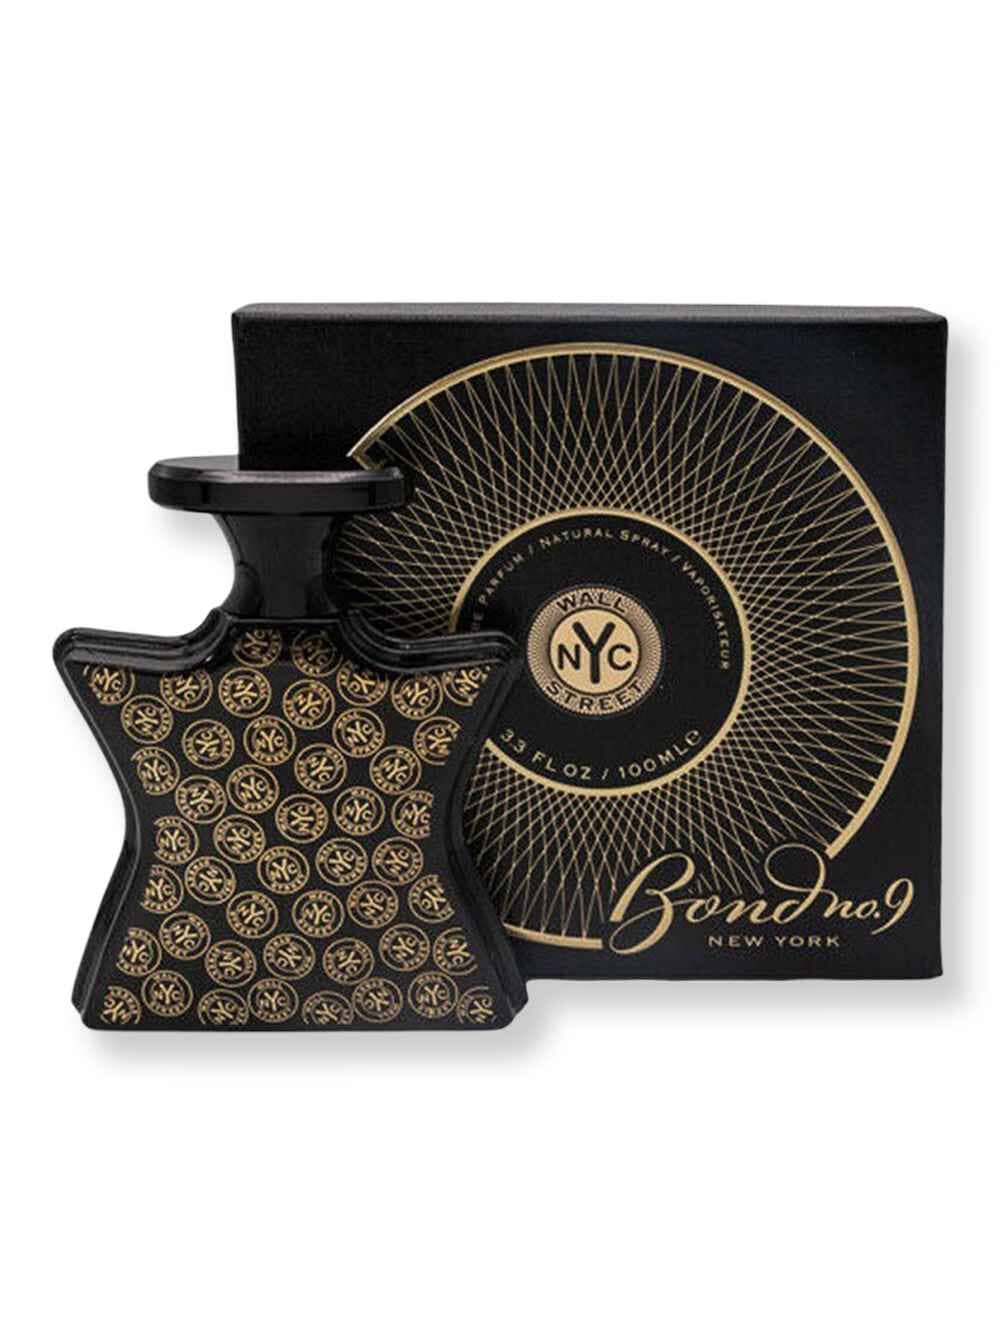 Bond No. 9 Bond No. 9 Wall Street EDP Spray 3.3 oz Perfume 